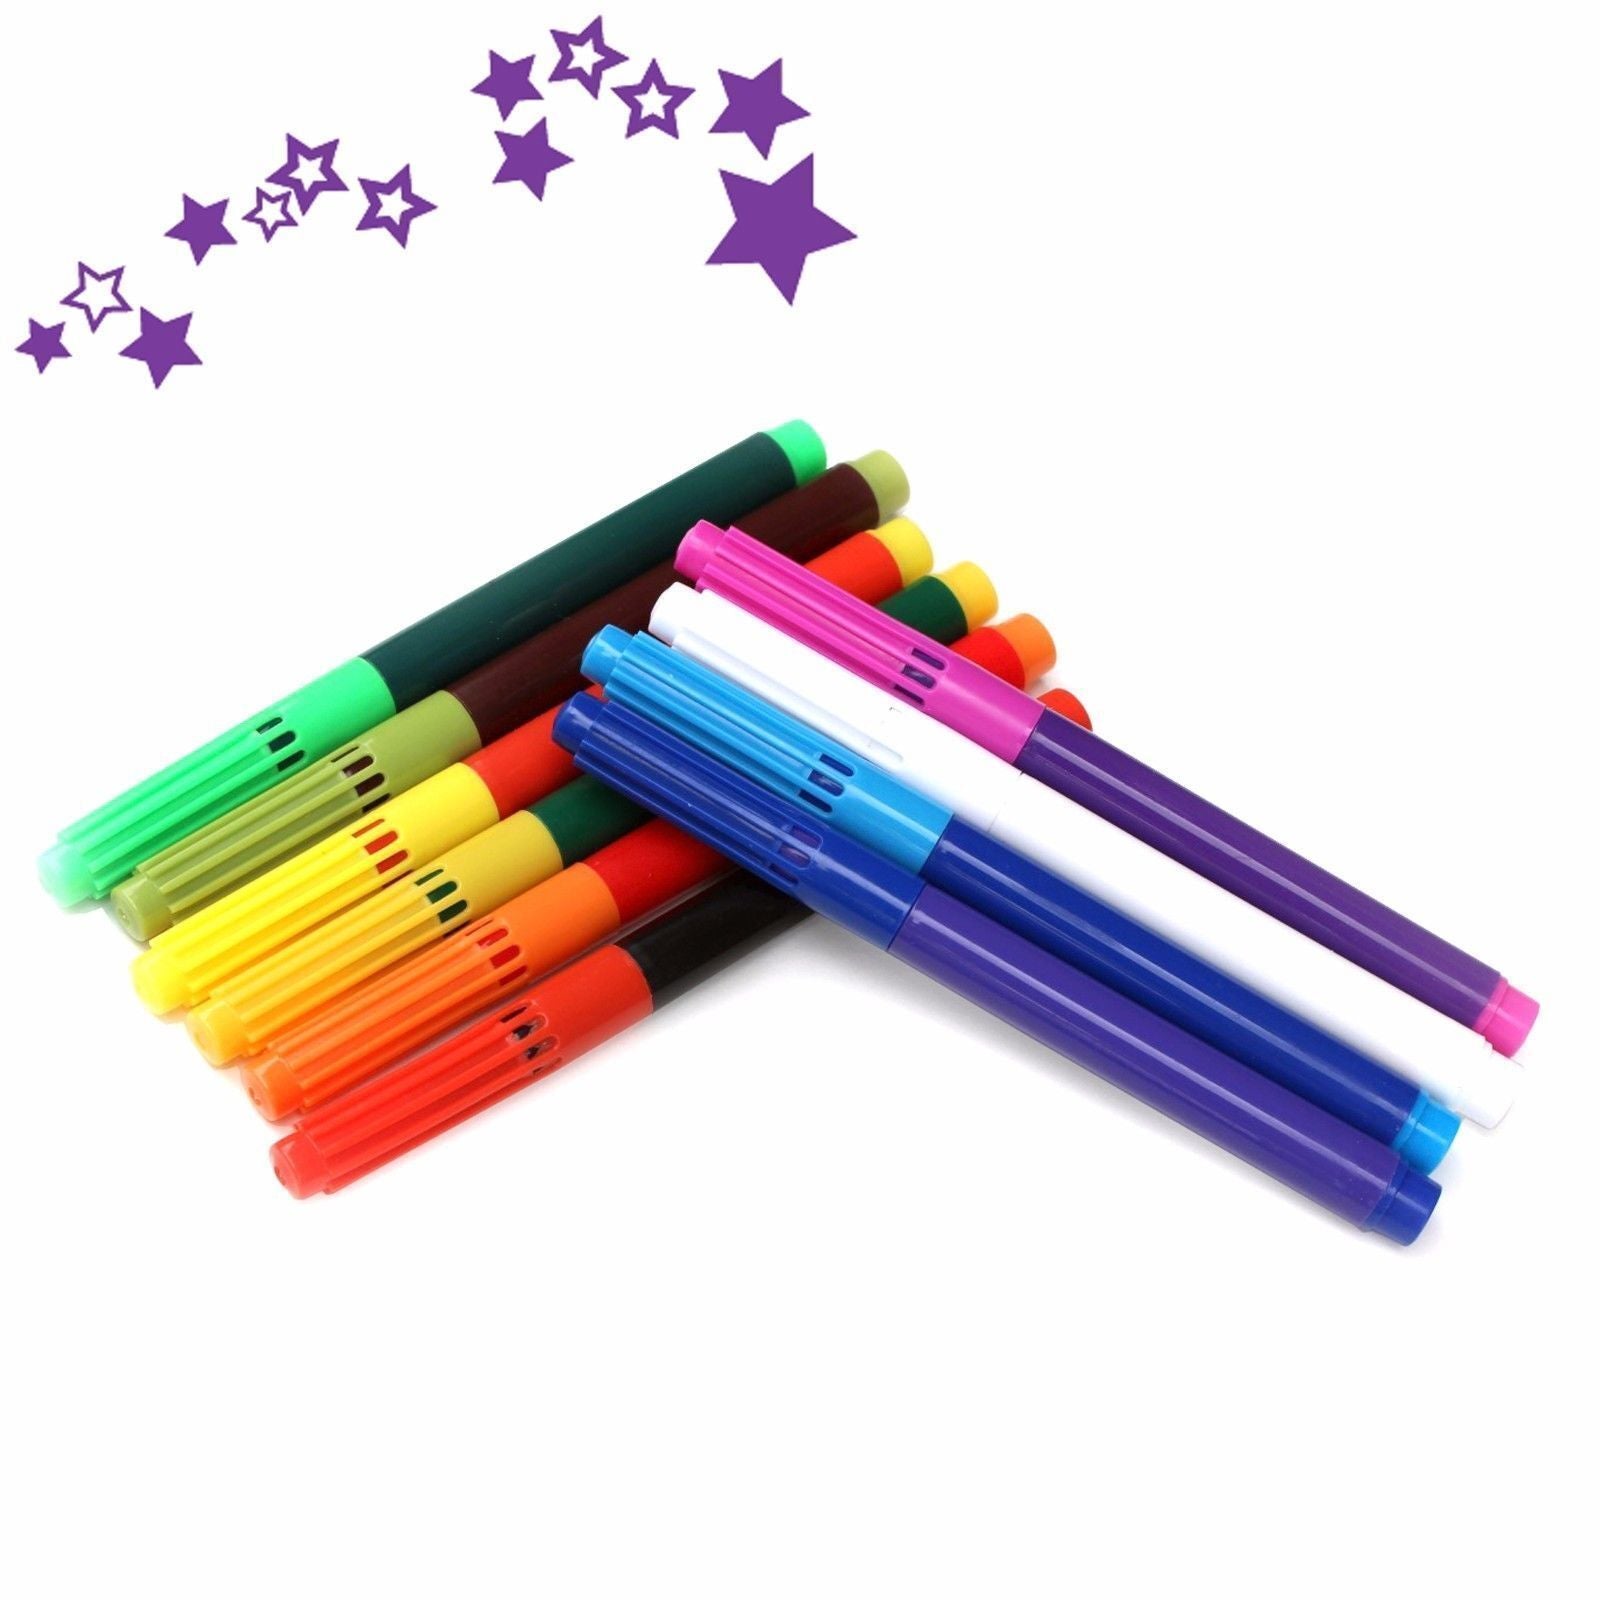 10Pc Glitter Coloured Glue Gel Pens Tubes Assorted Sparkly Kids DIY Art &  Craft 5013922050324